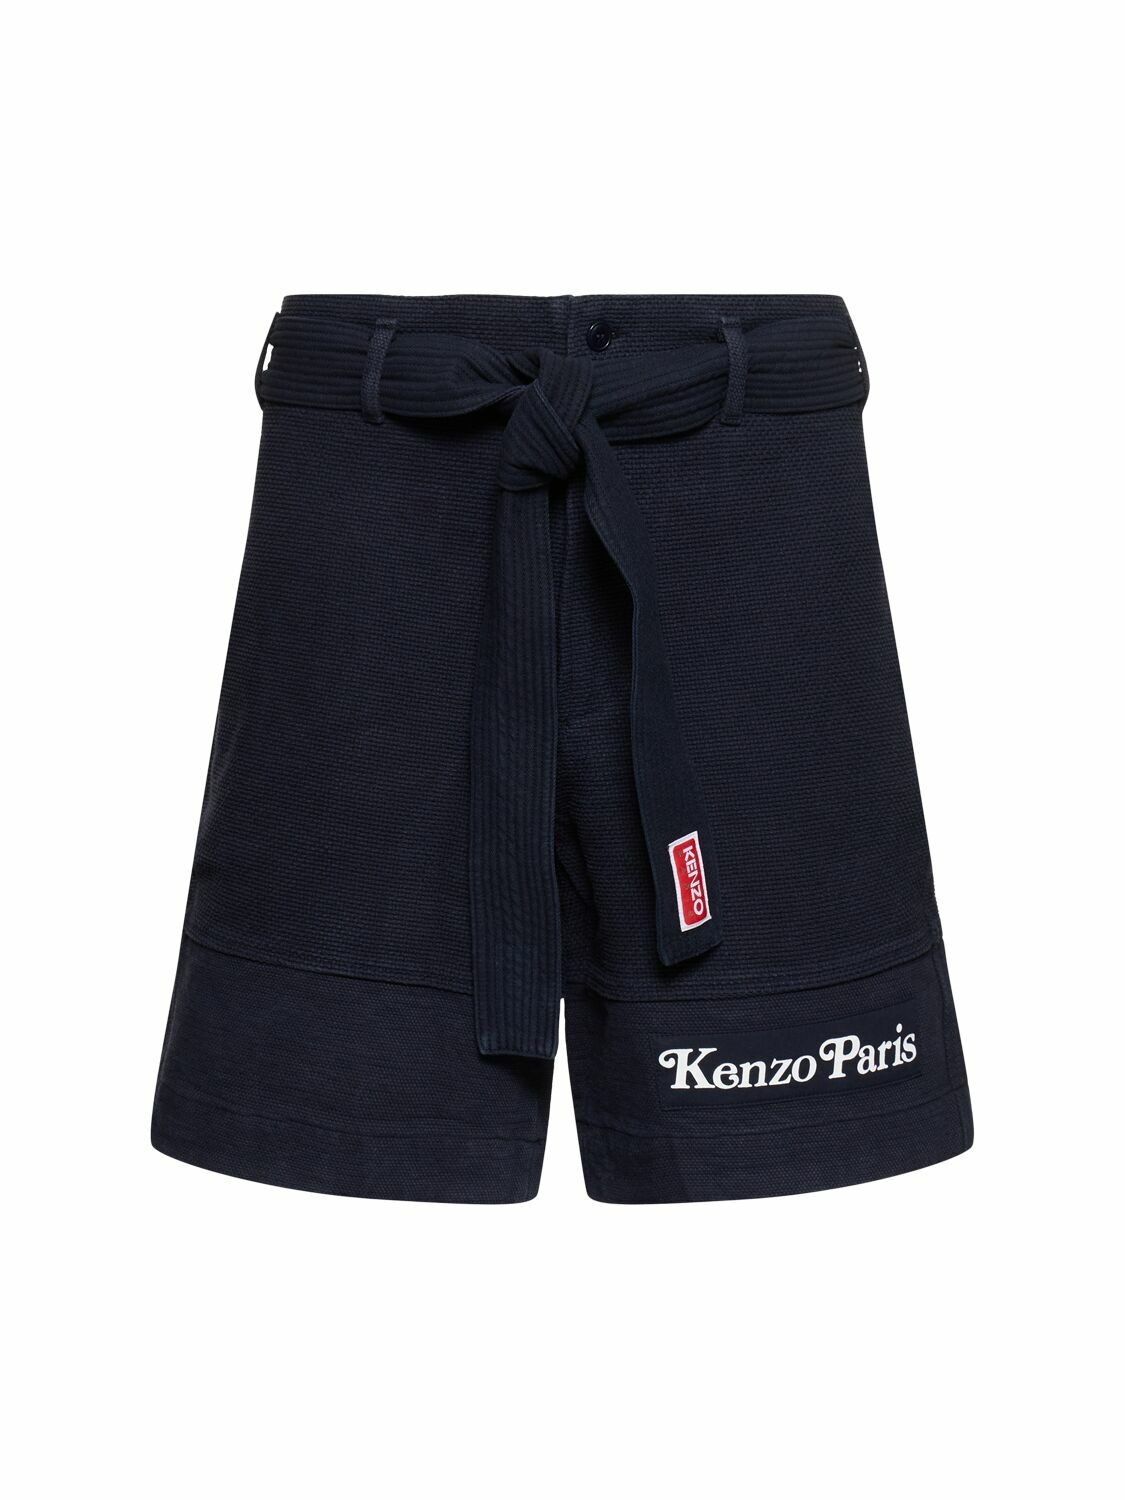 Photo: KENZO PARIS Kenzo By Verdy Woven Cotton Judo Shorts